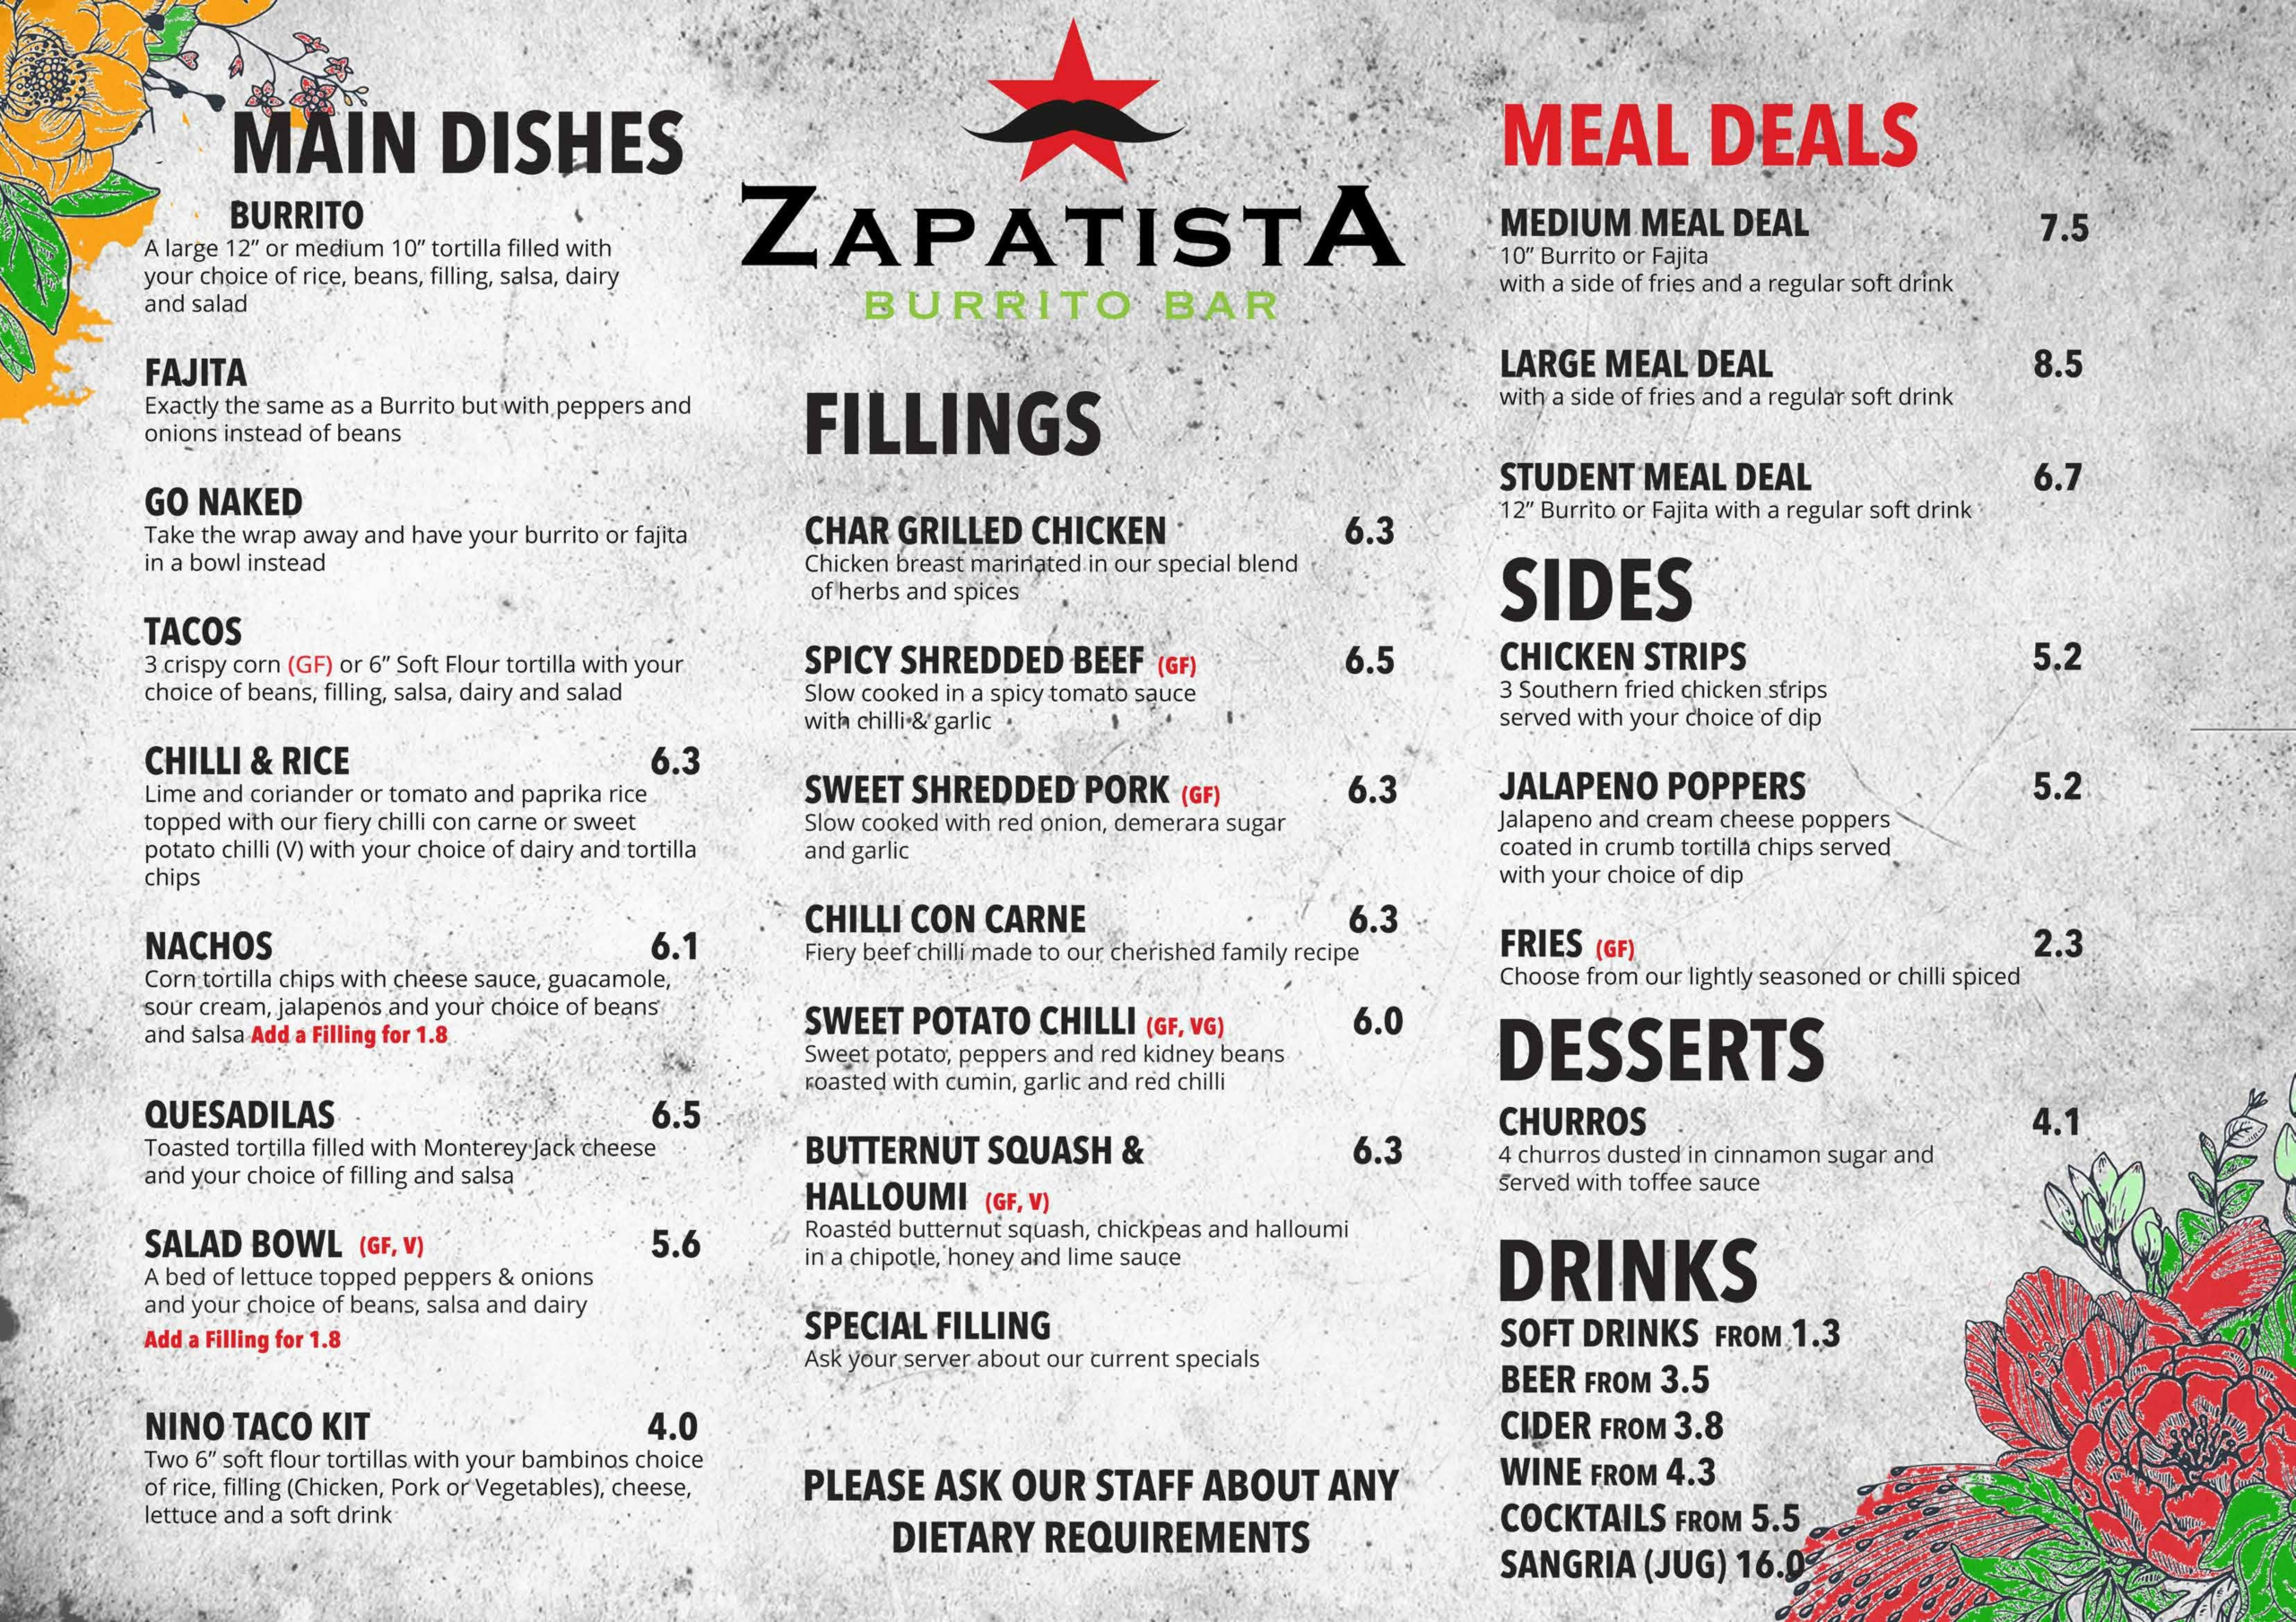 Zapatista Burrito Bar & Mexican restauran - main menu